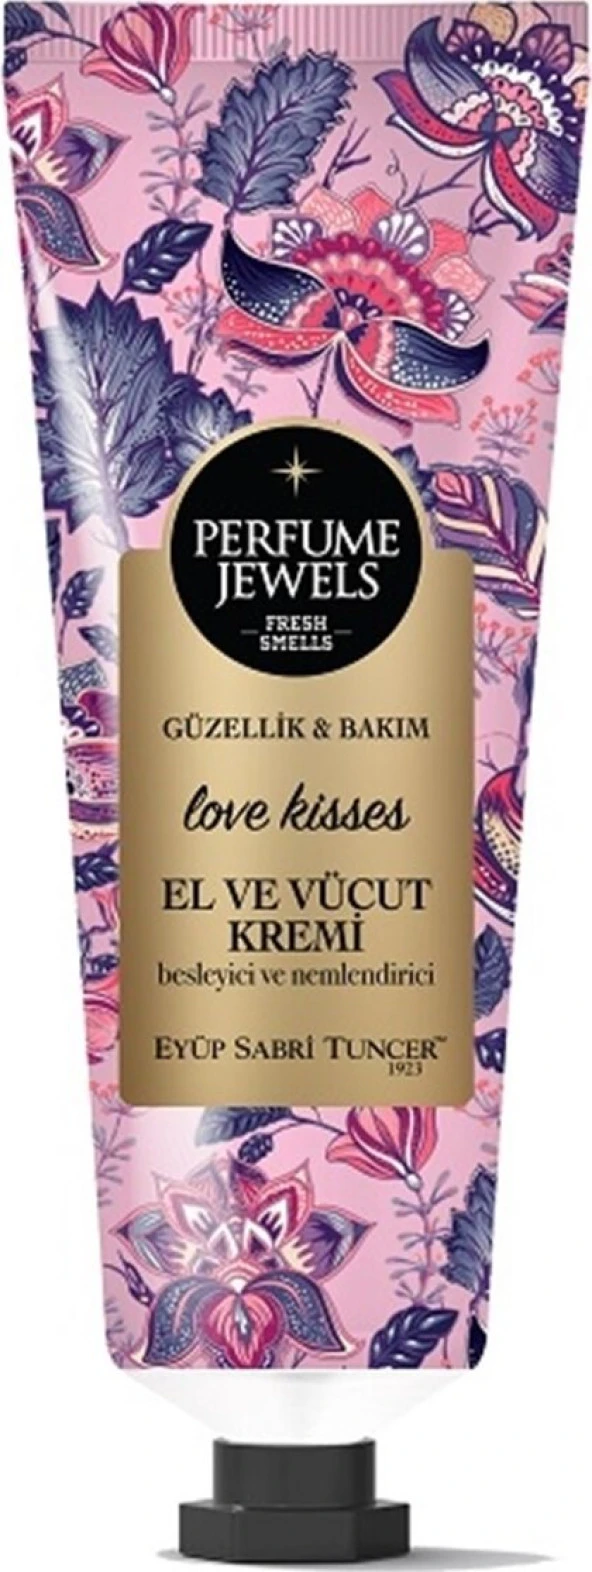 Eyüp Sabri Tuncer Perfume Jewels Love Kisses El Kremi 50ML x 3